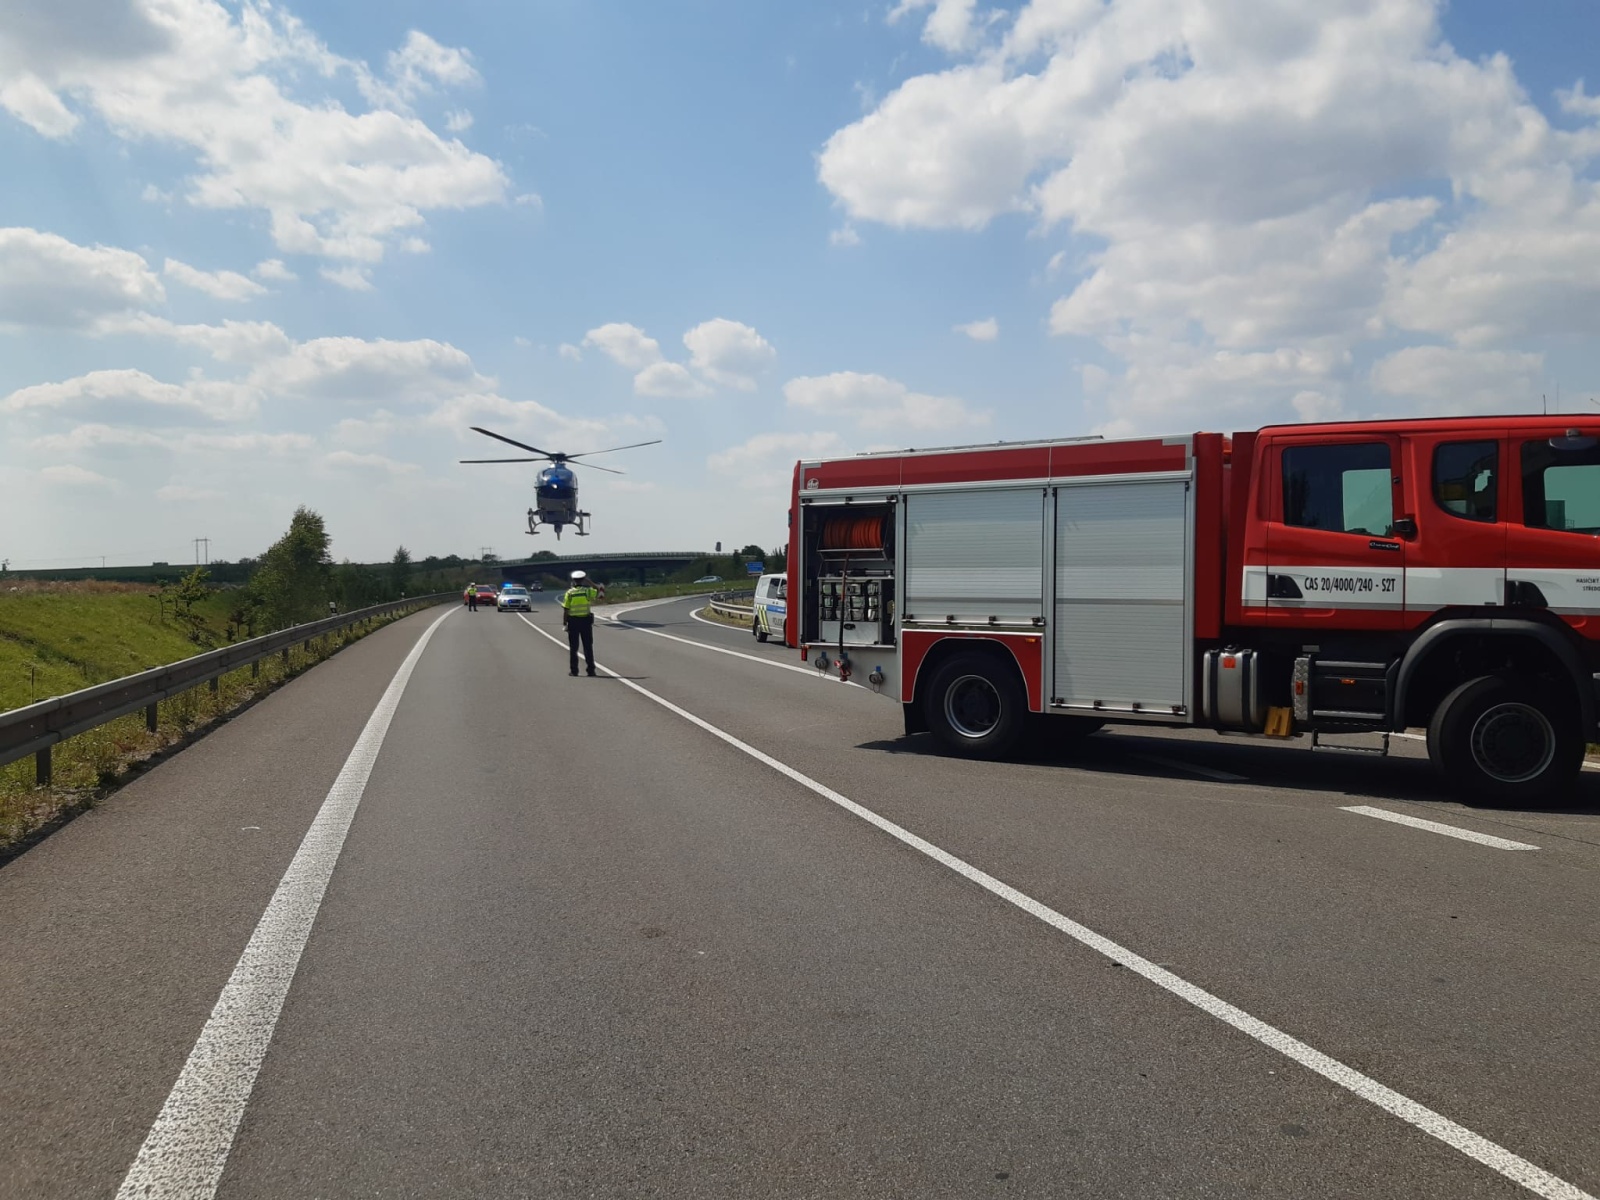 002-Vážná dopravní nehoda na obchvatu Kolína.jpg